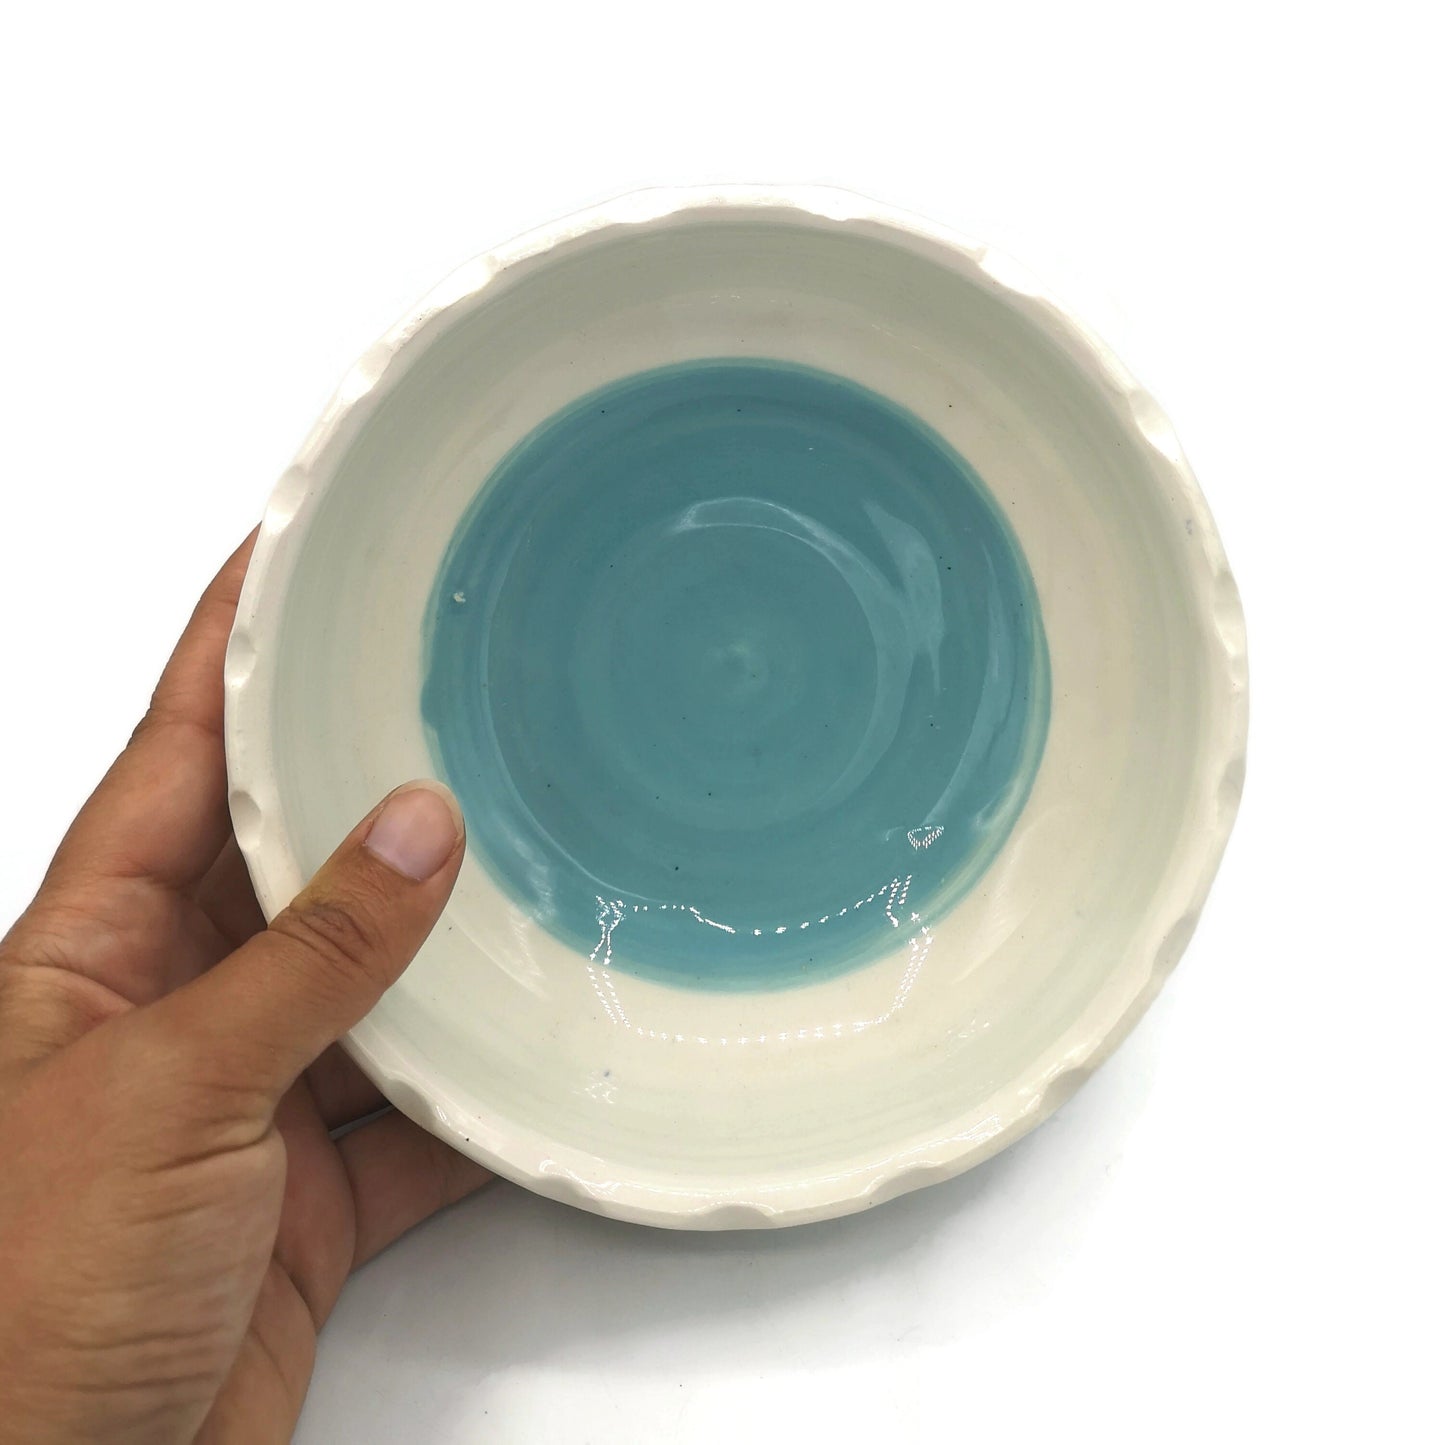 Turquoise Blue and White Handmade Ceramic Bowl, Decorative Artisan Pottery For Home Decor, Unique Housewarming Gift Ideas First Home For Him - Ceramica Ana Rafael